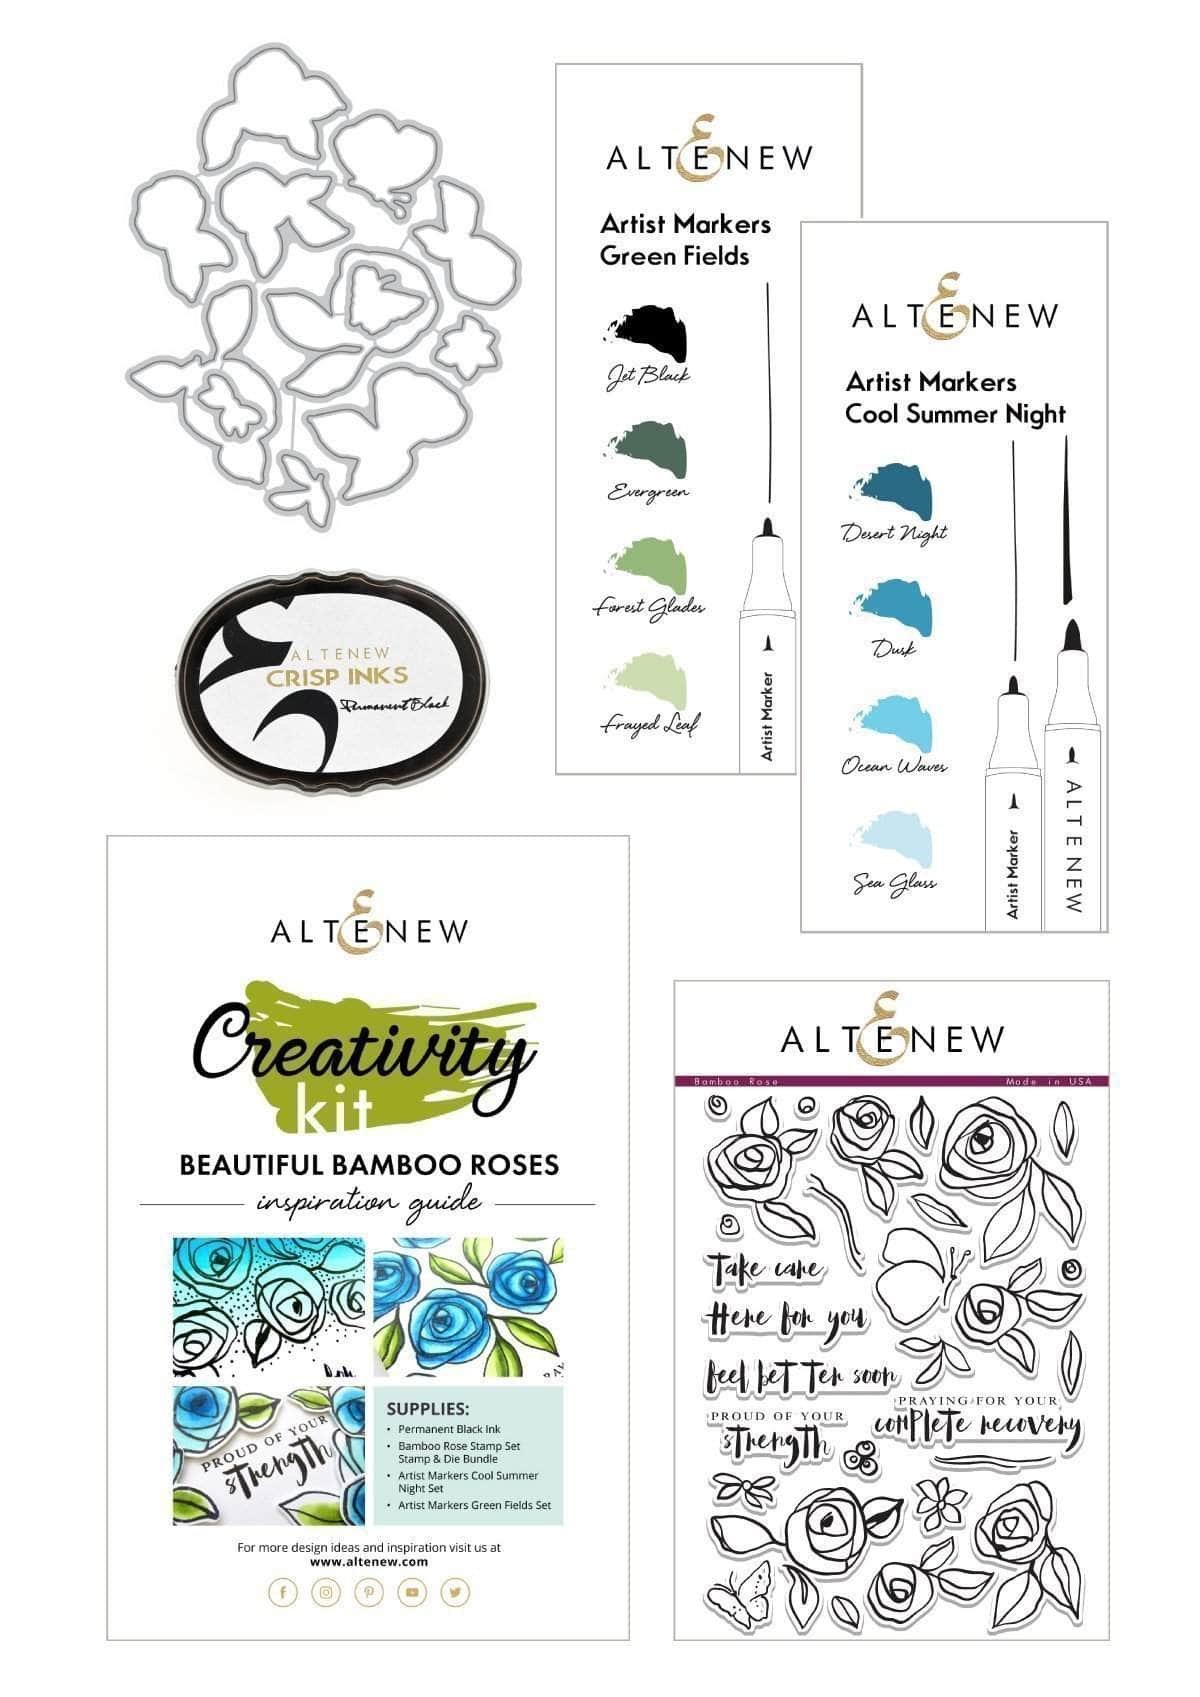 Altenew Creativity Kit Bundle Beautiful Bamboo Roses Creativity Cardmaking Kit